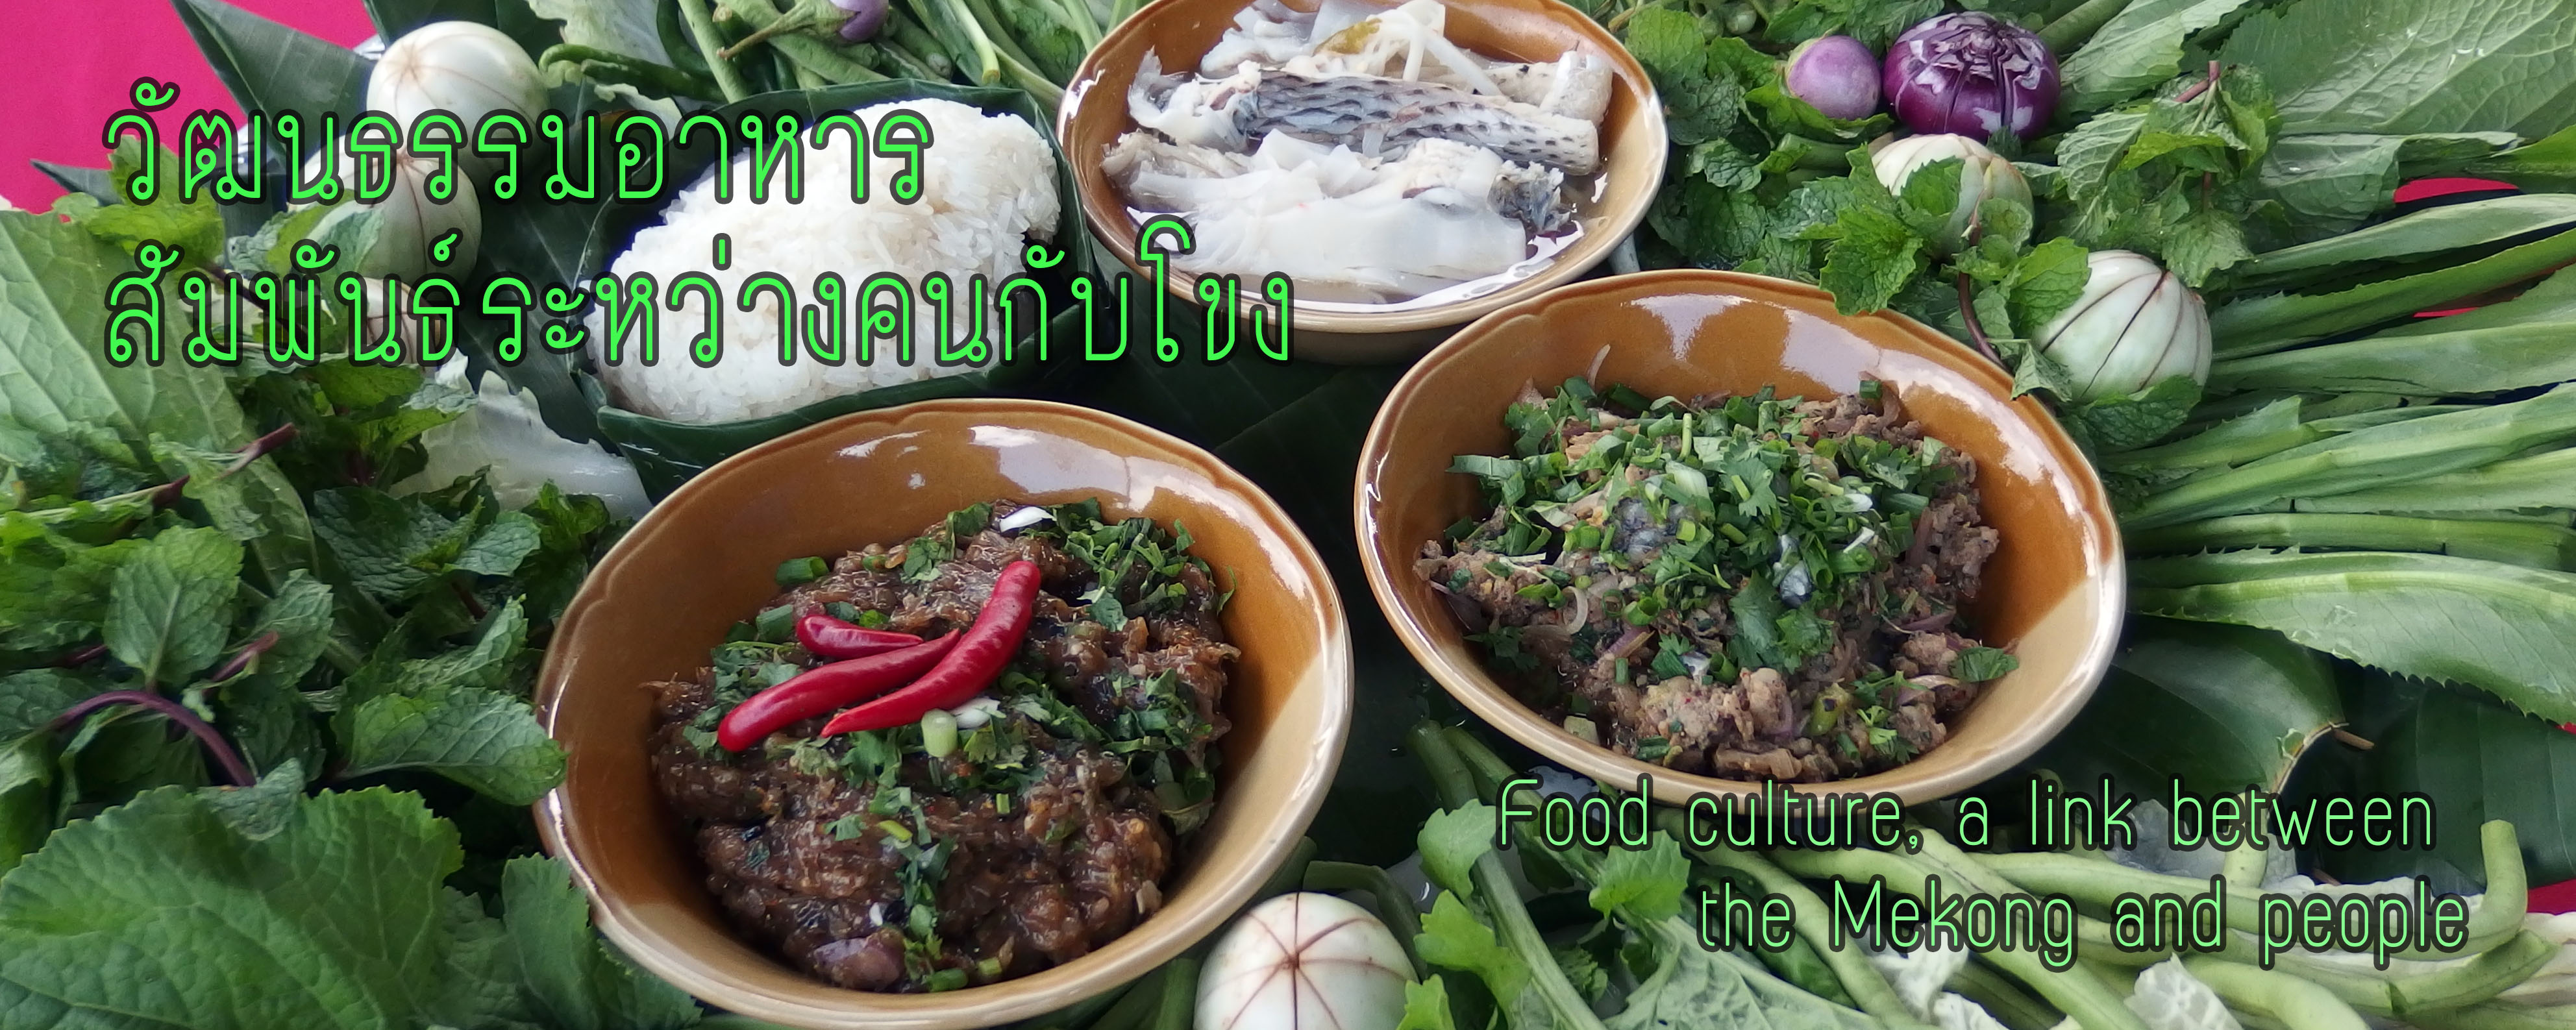 Mekong food 5x2